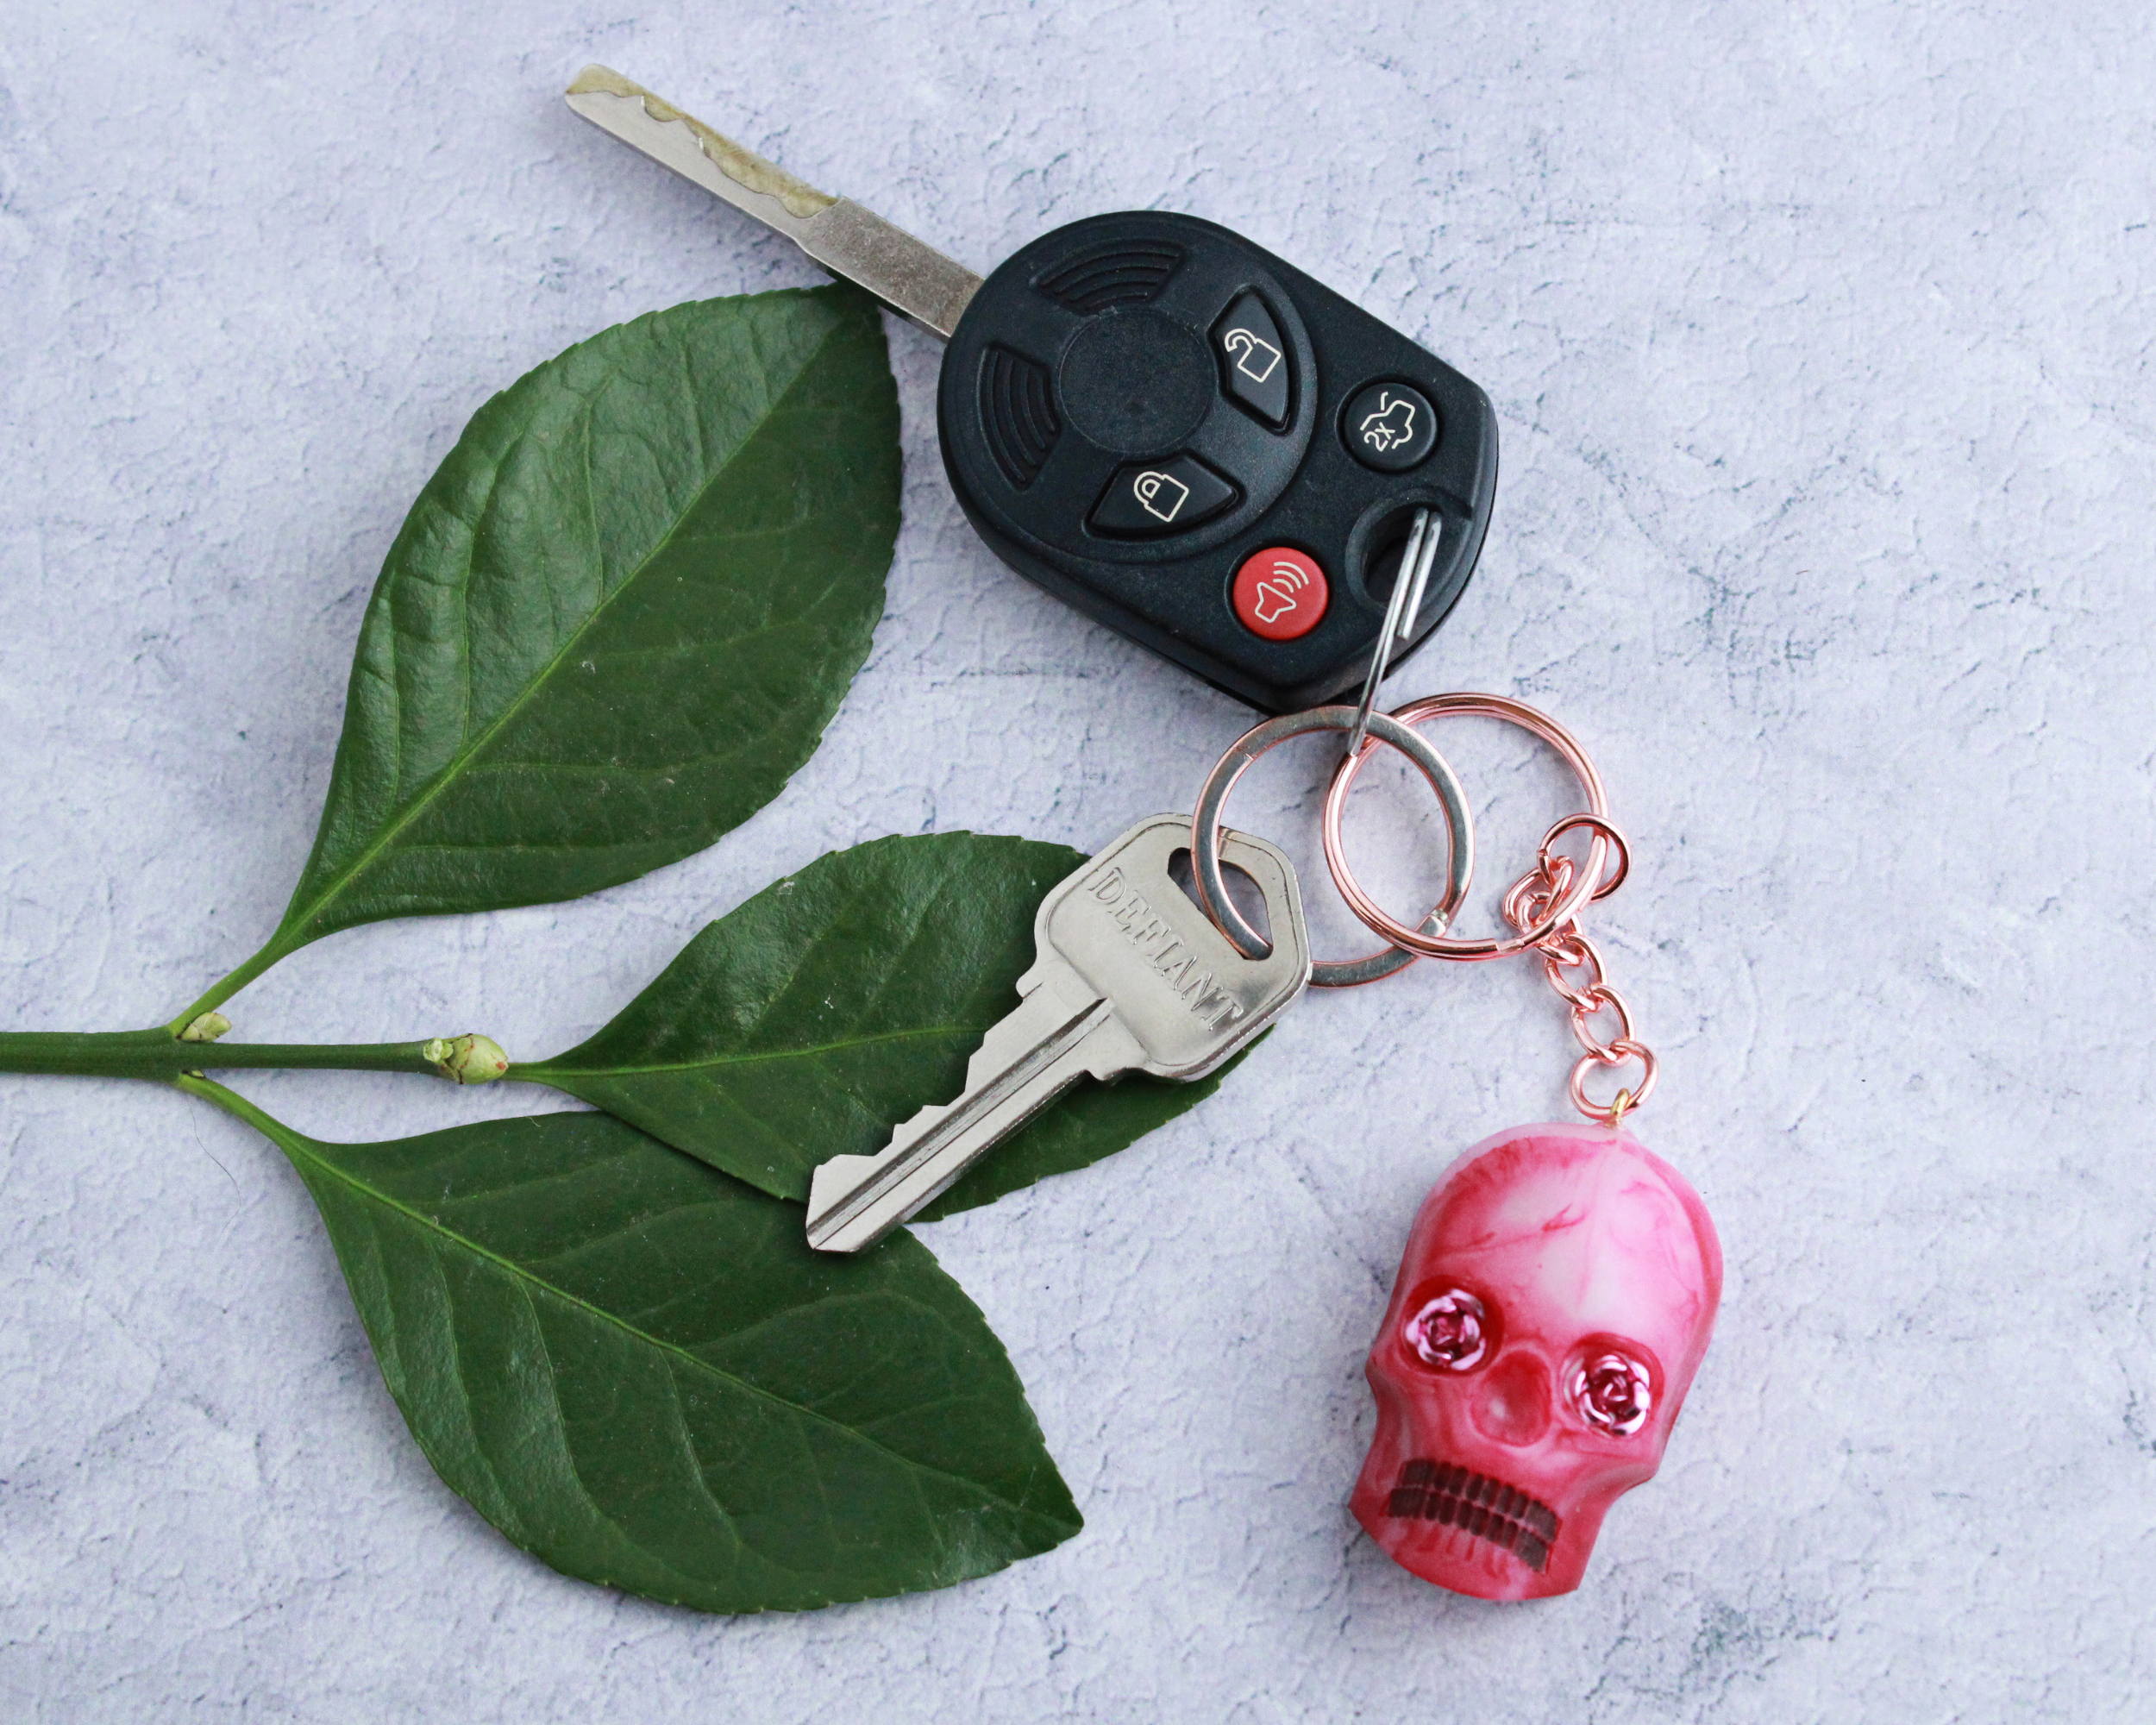 Pink Skull Heart Glitter Keychain